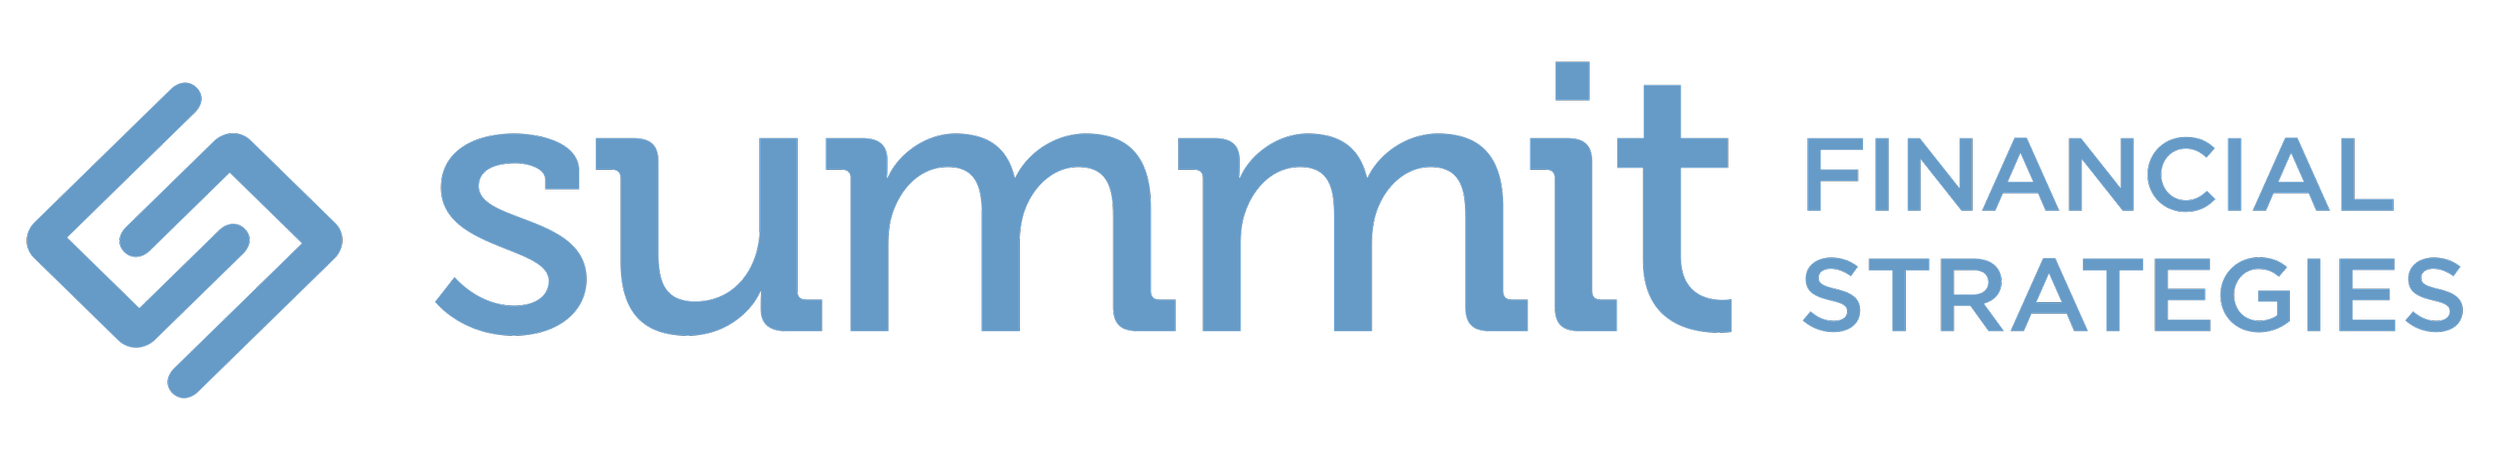 Summit financial Logo.PNG